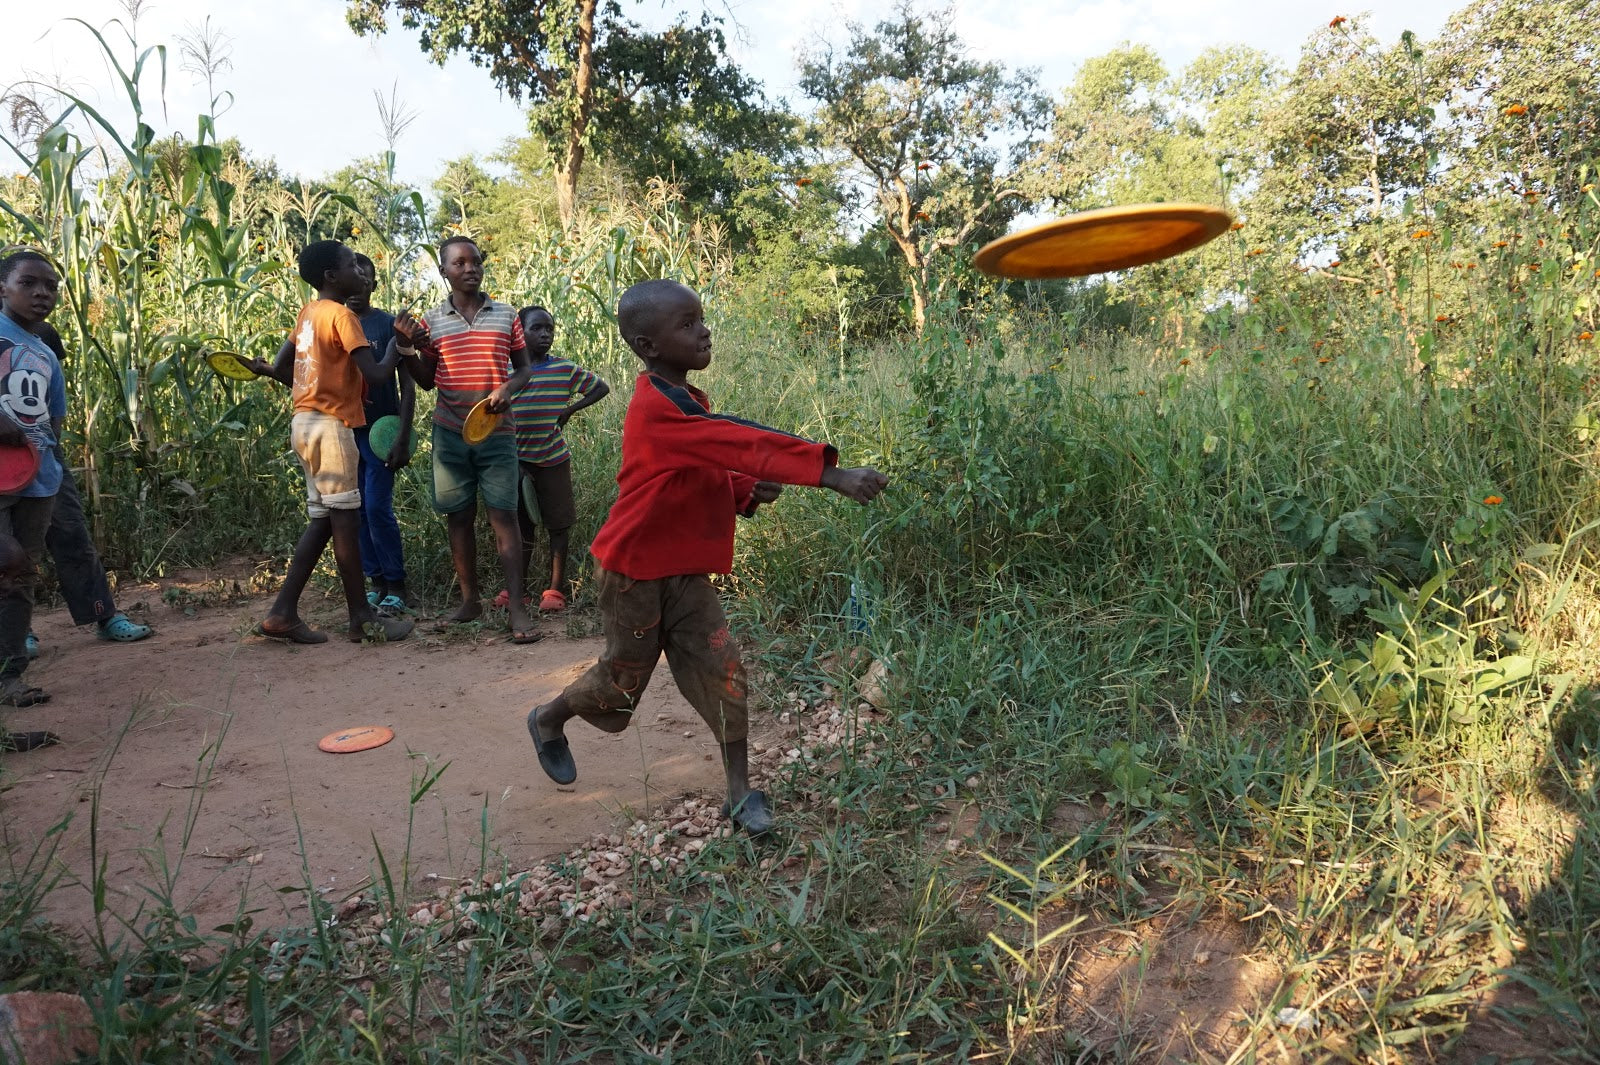 Kids in Zambia playing disc golf